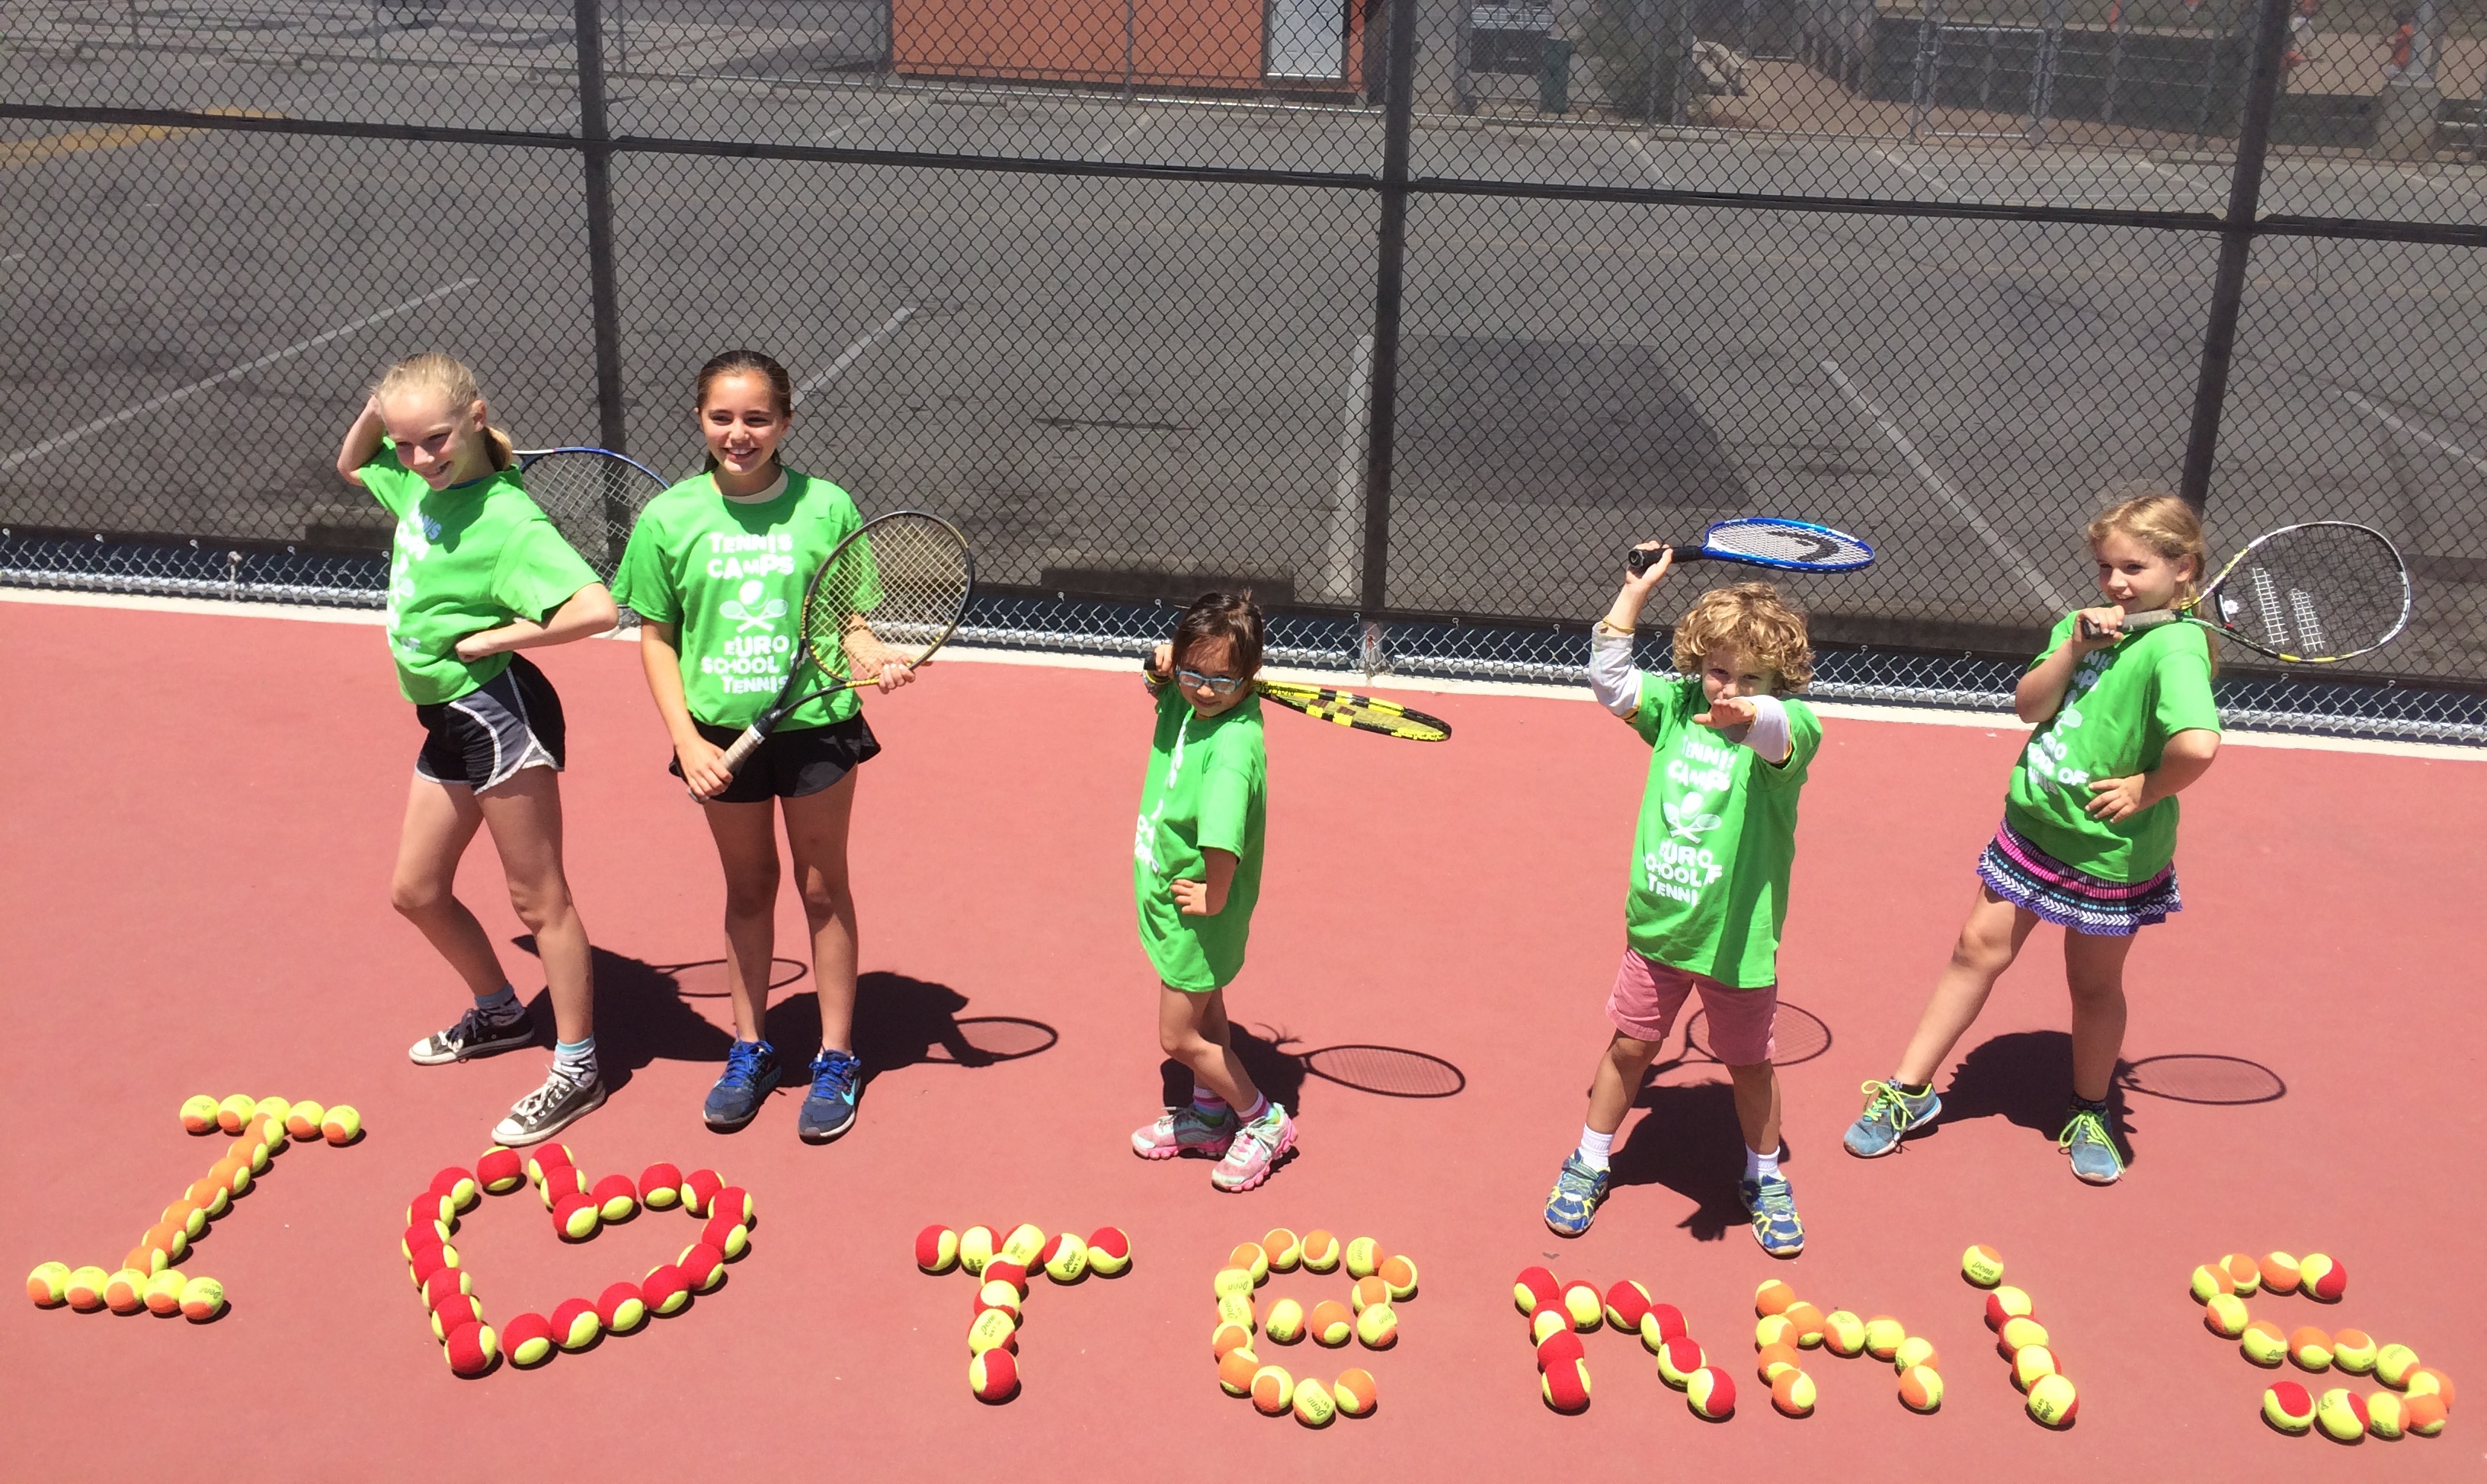 Summer Tennis Camp in San Mateo Tennis Academy San Mateo